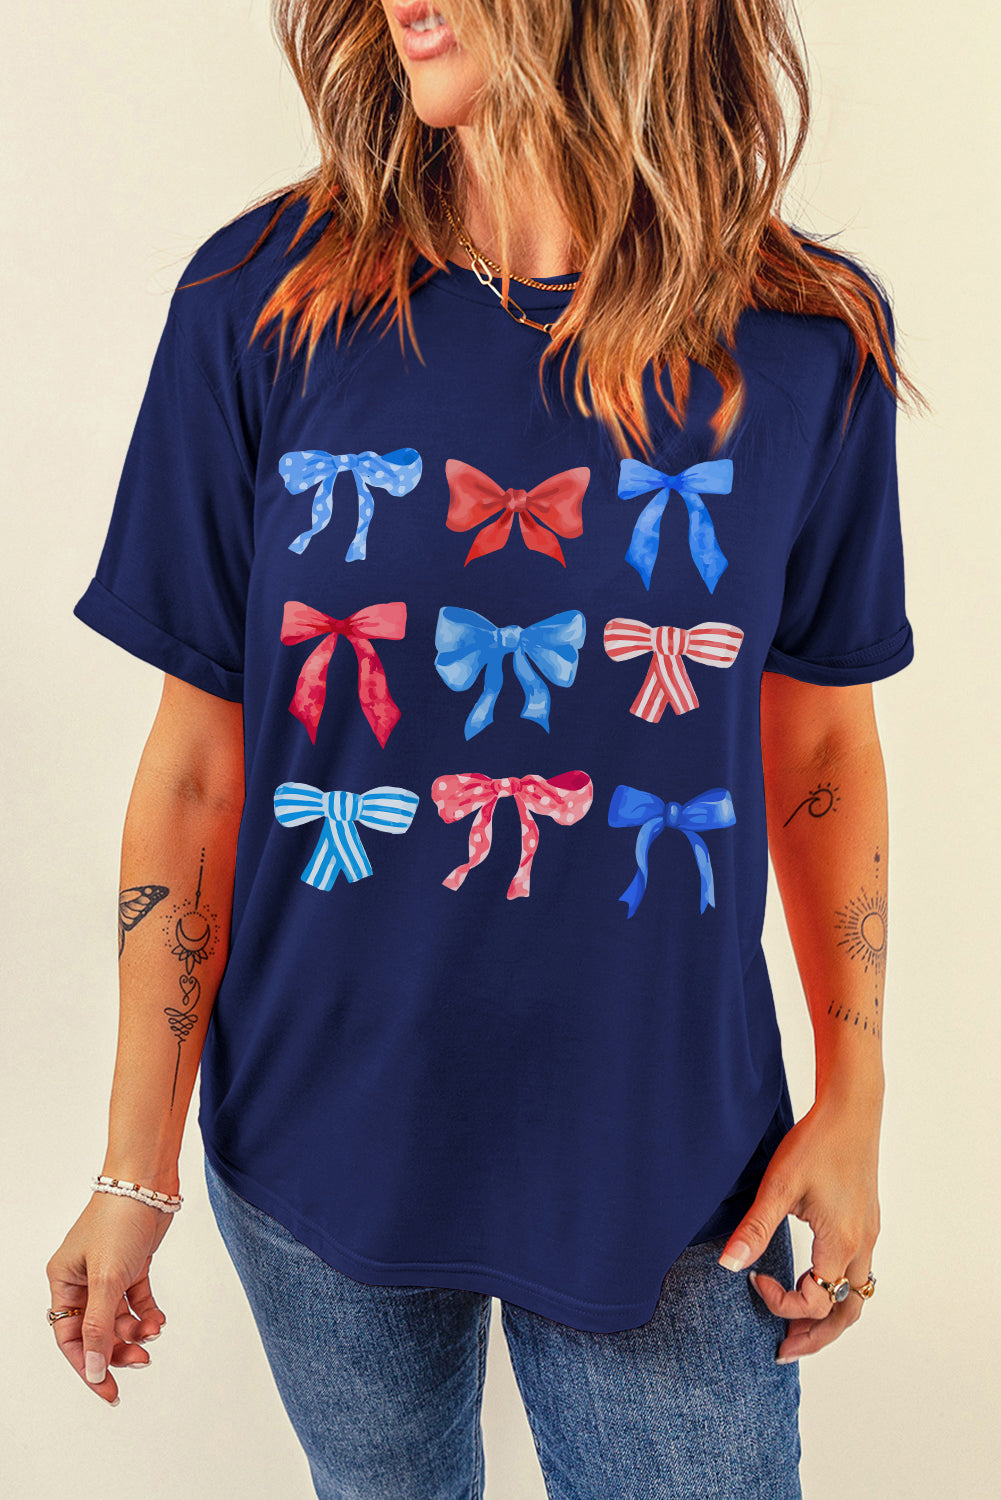 Patriotic Bow Graphic Women's Short Sleeve T-Shirt - Sydney So Sweet